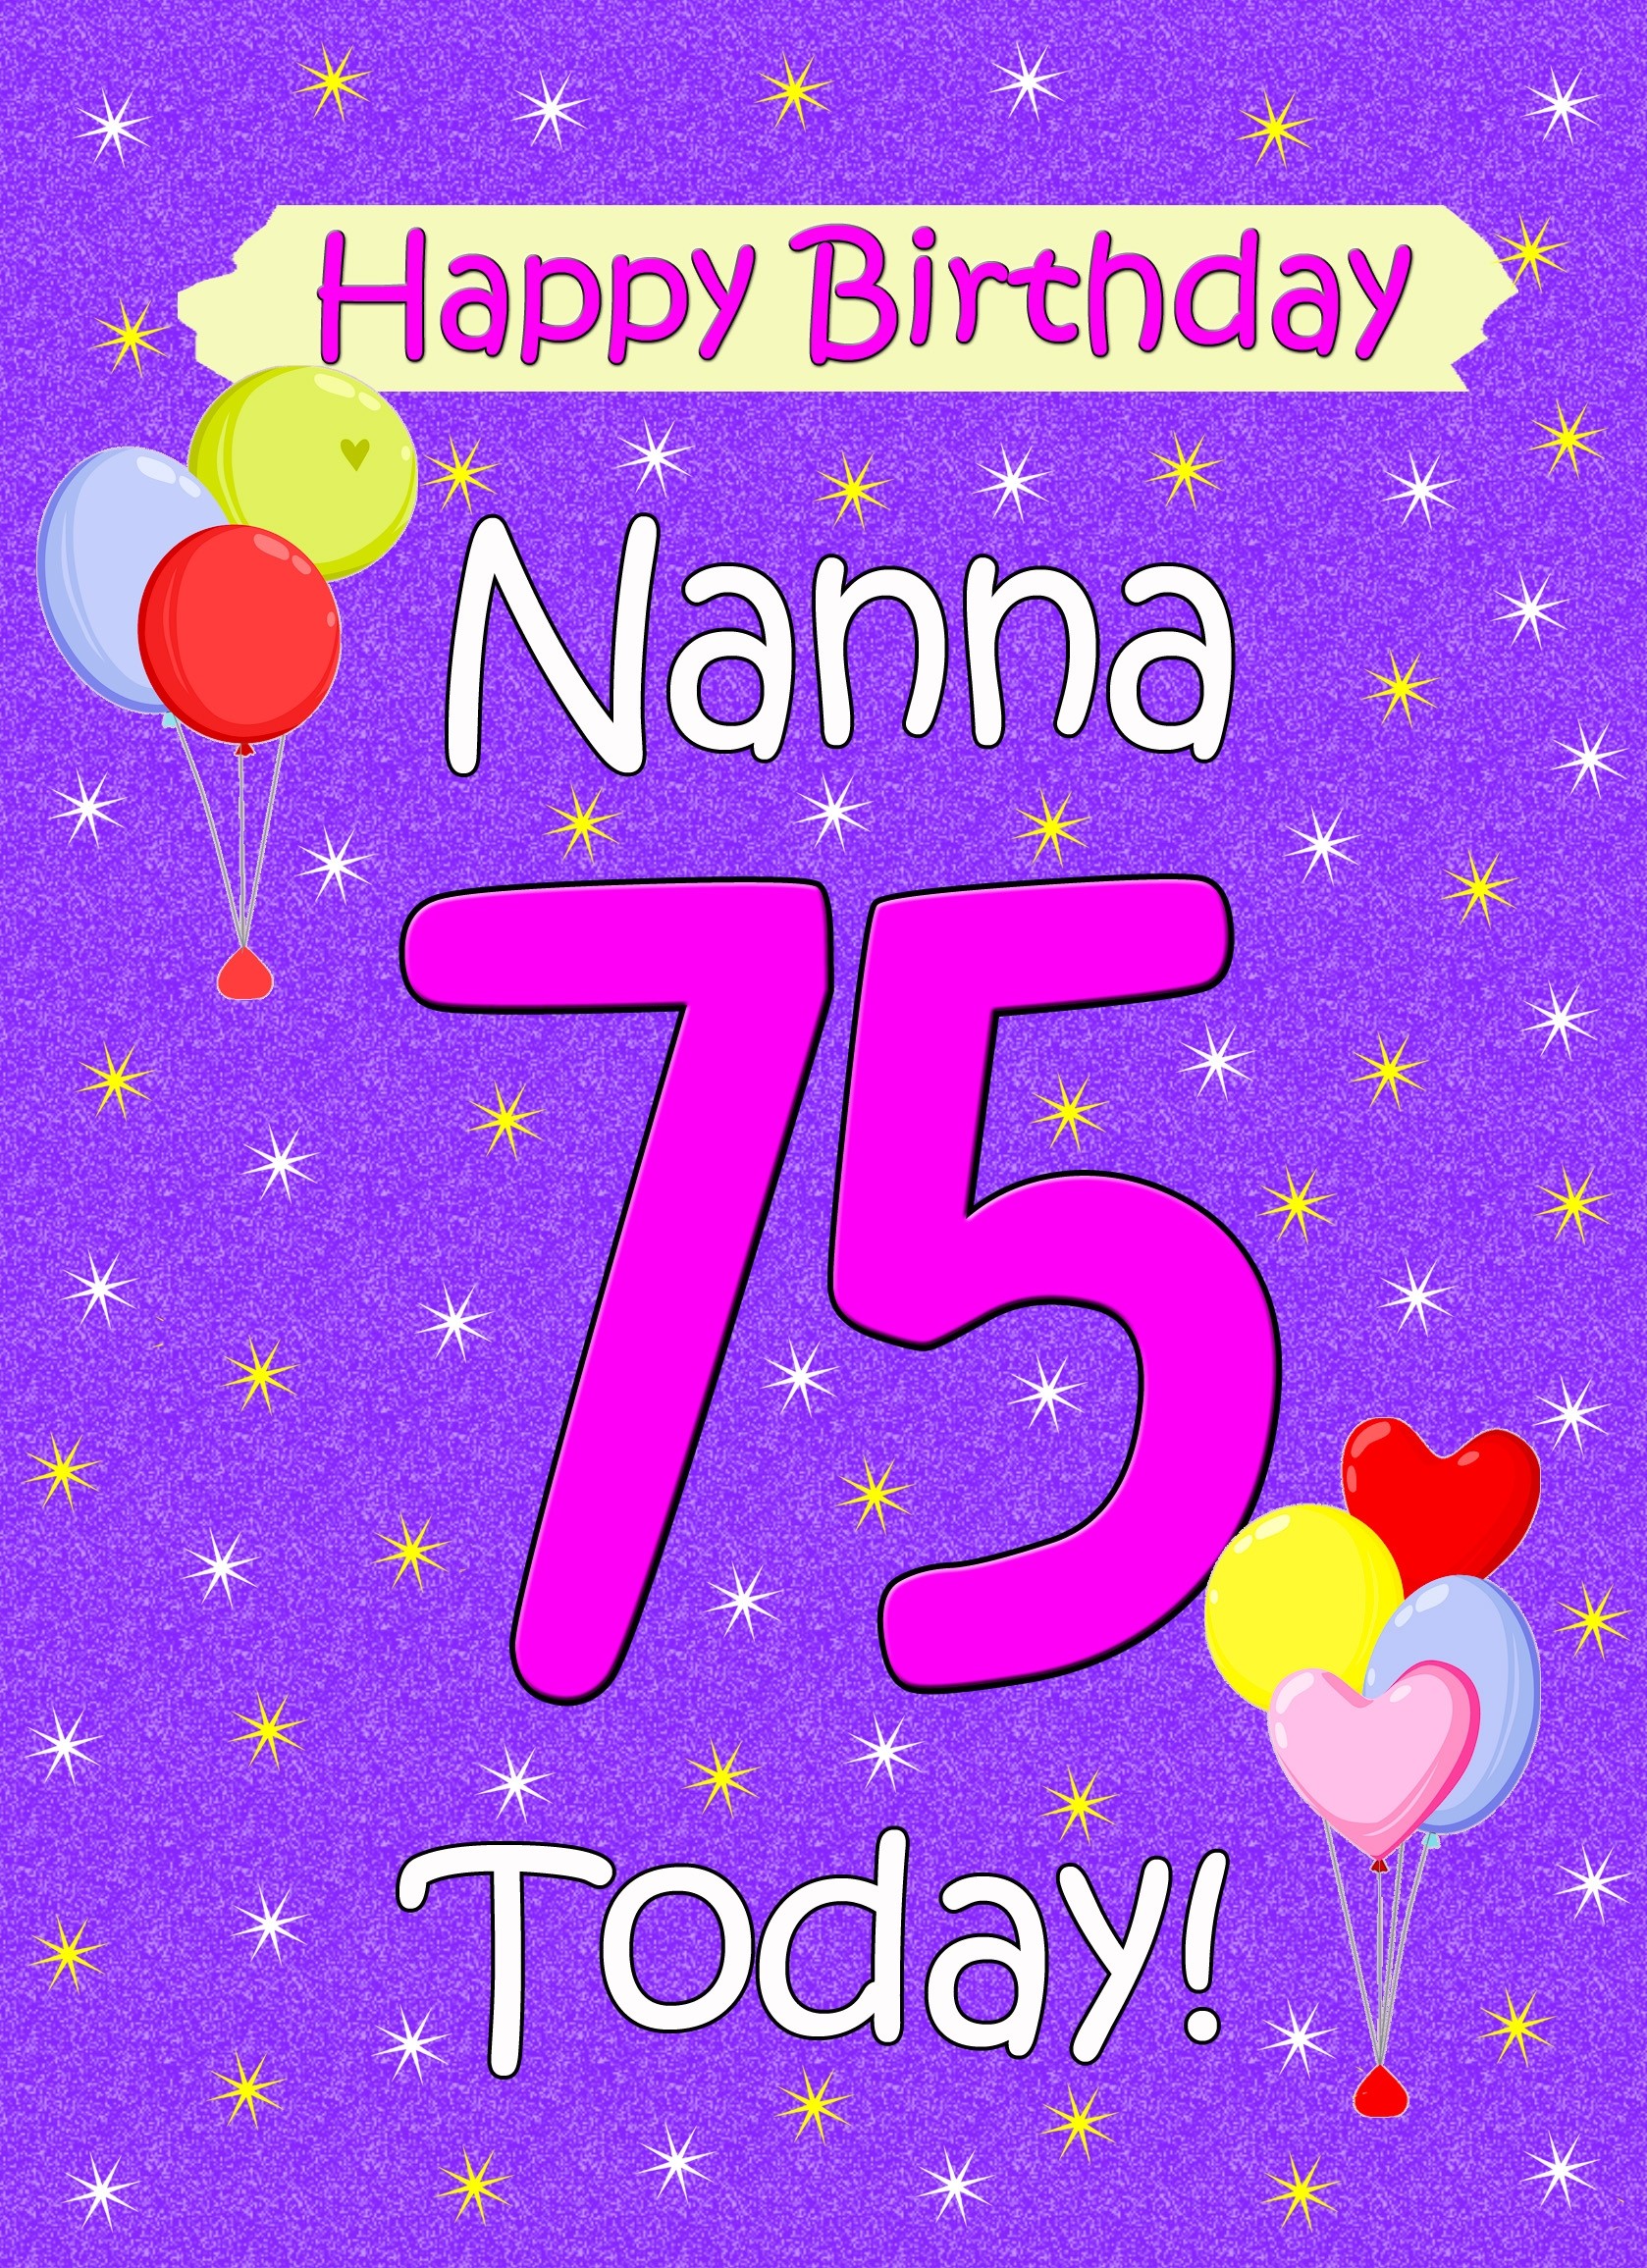 Nanna 75th Birthday Card (Lilac)